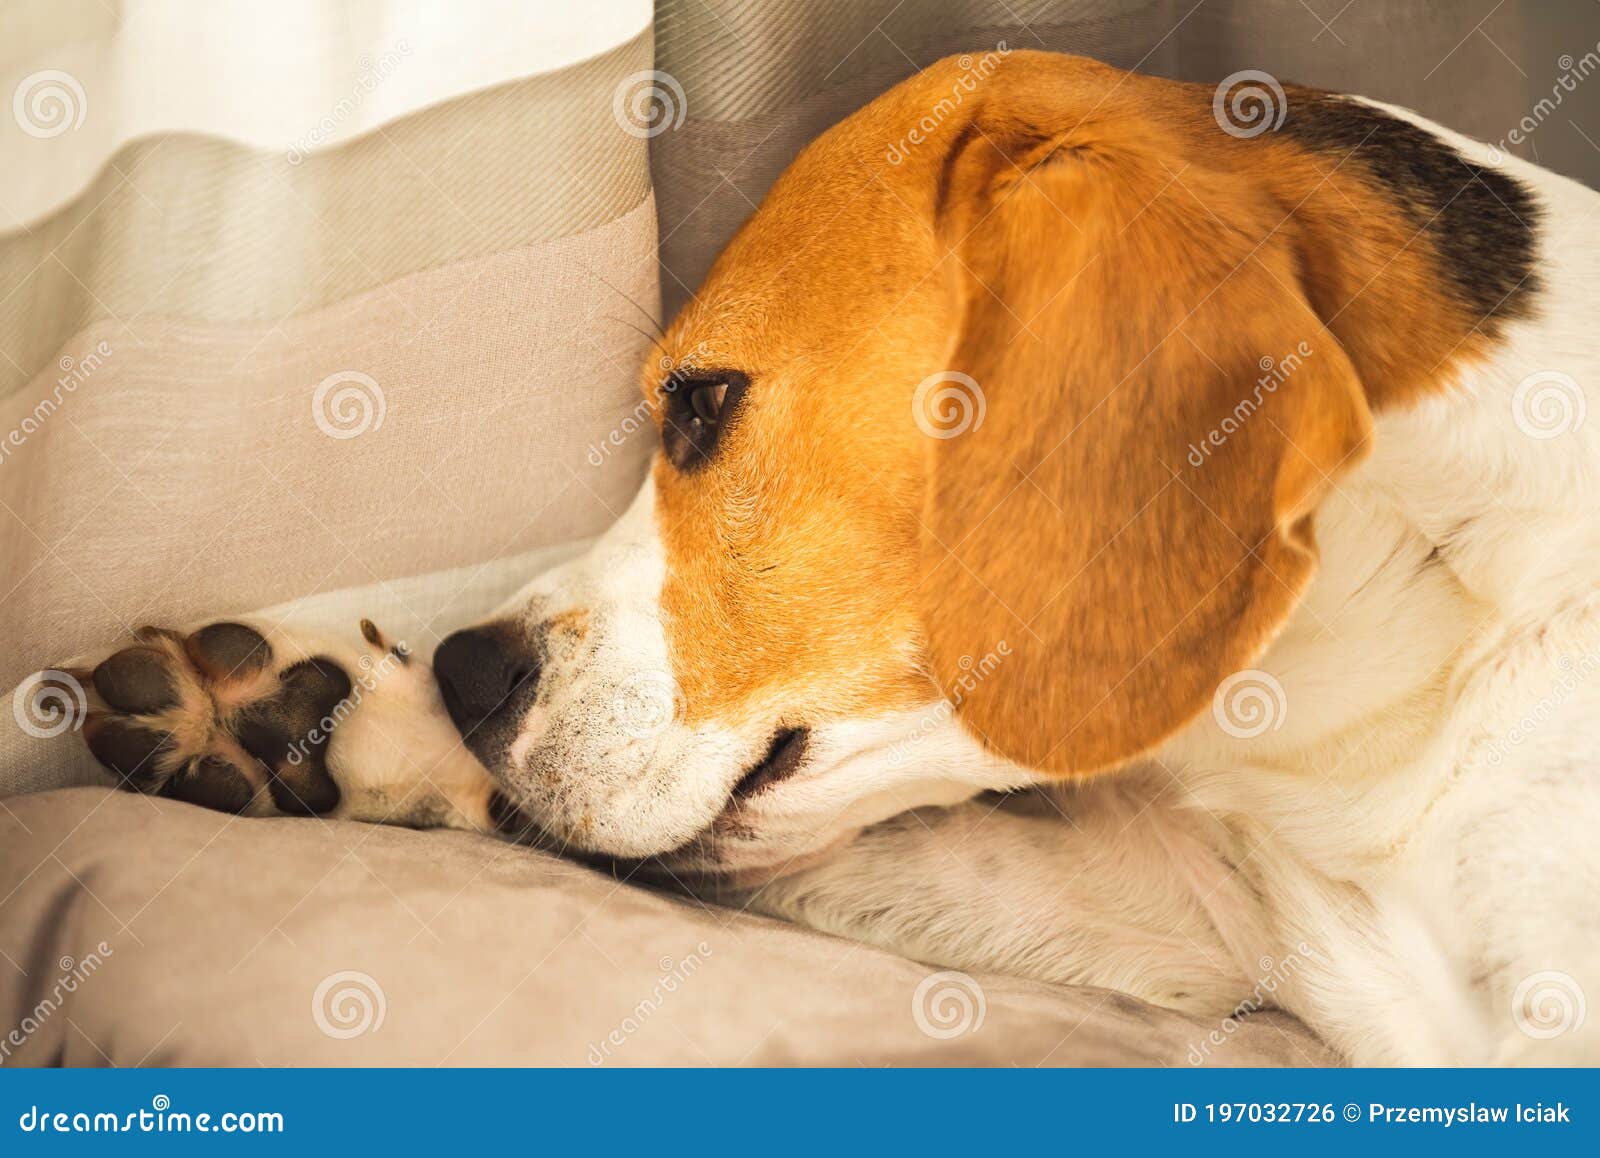 Beagle Dog Biting His Itching Skin On Legs. Skin Problem